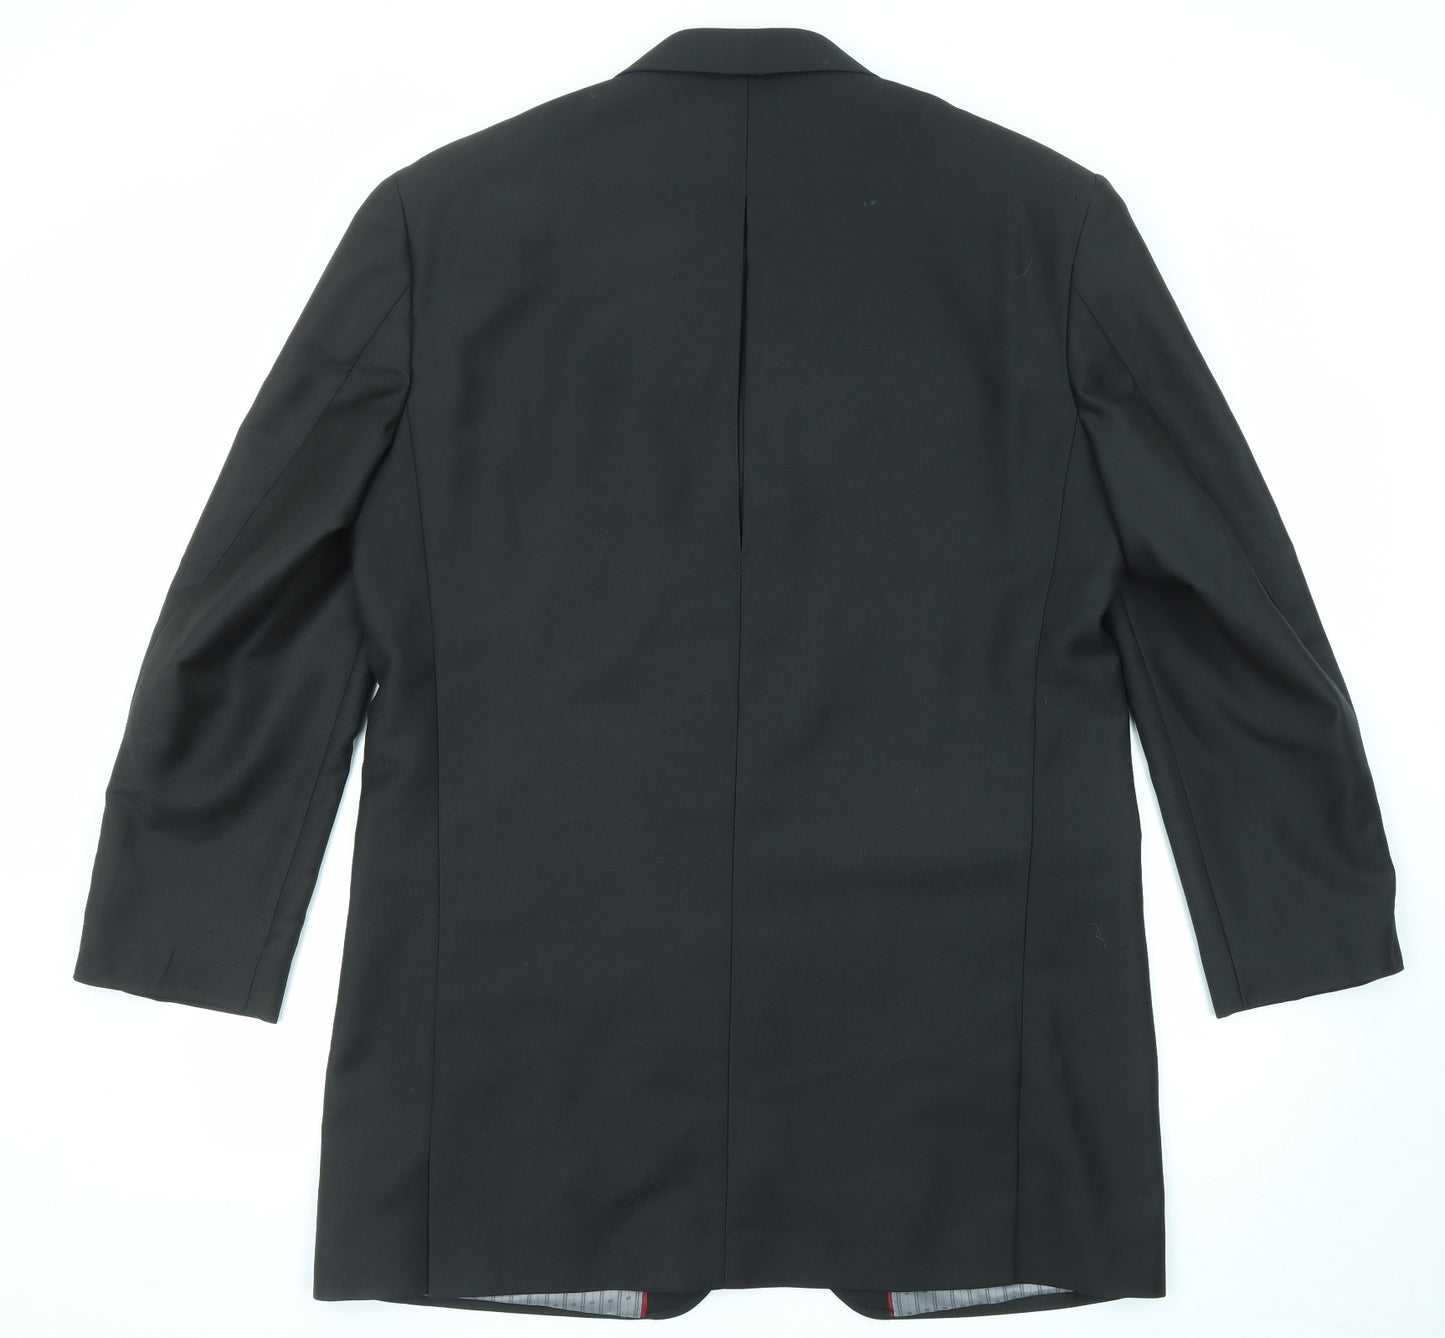 Pallini Mens Black Polyester Jacket Suit Jacket Size 42 Regular